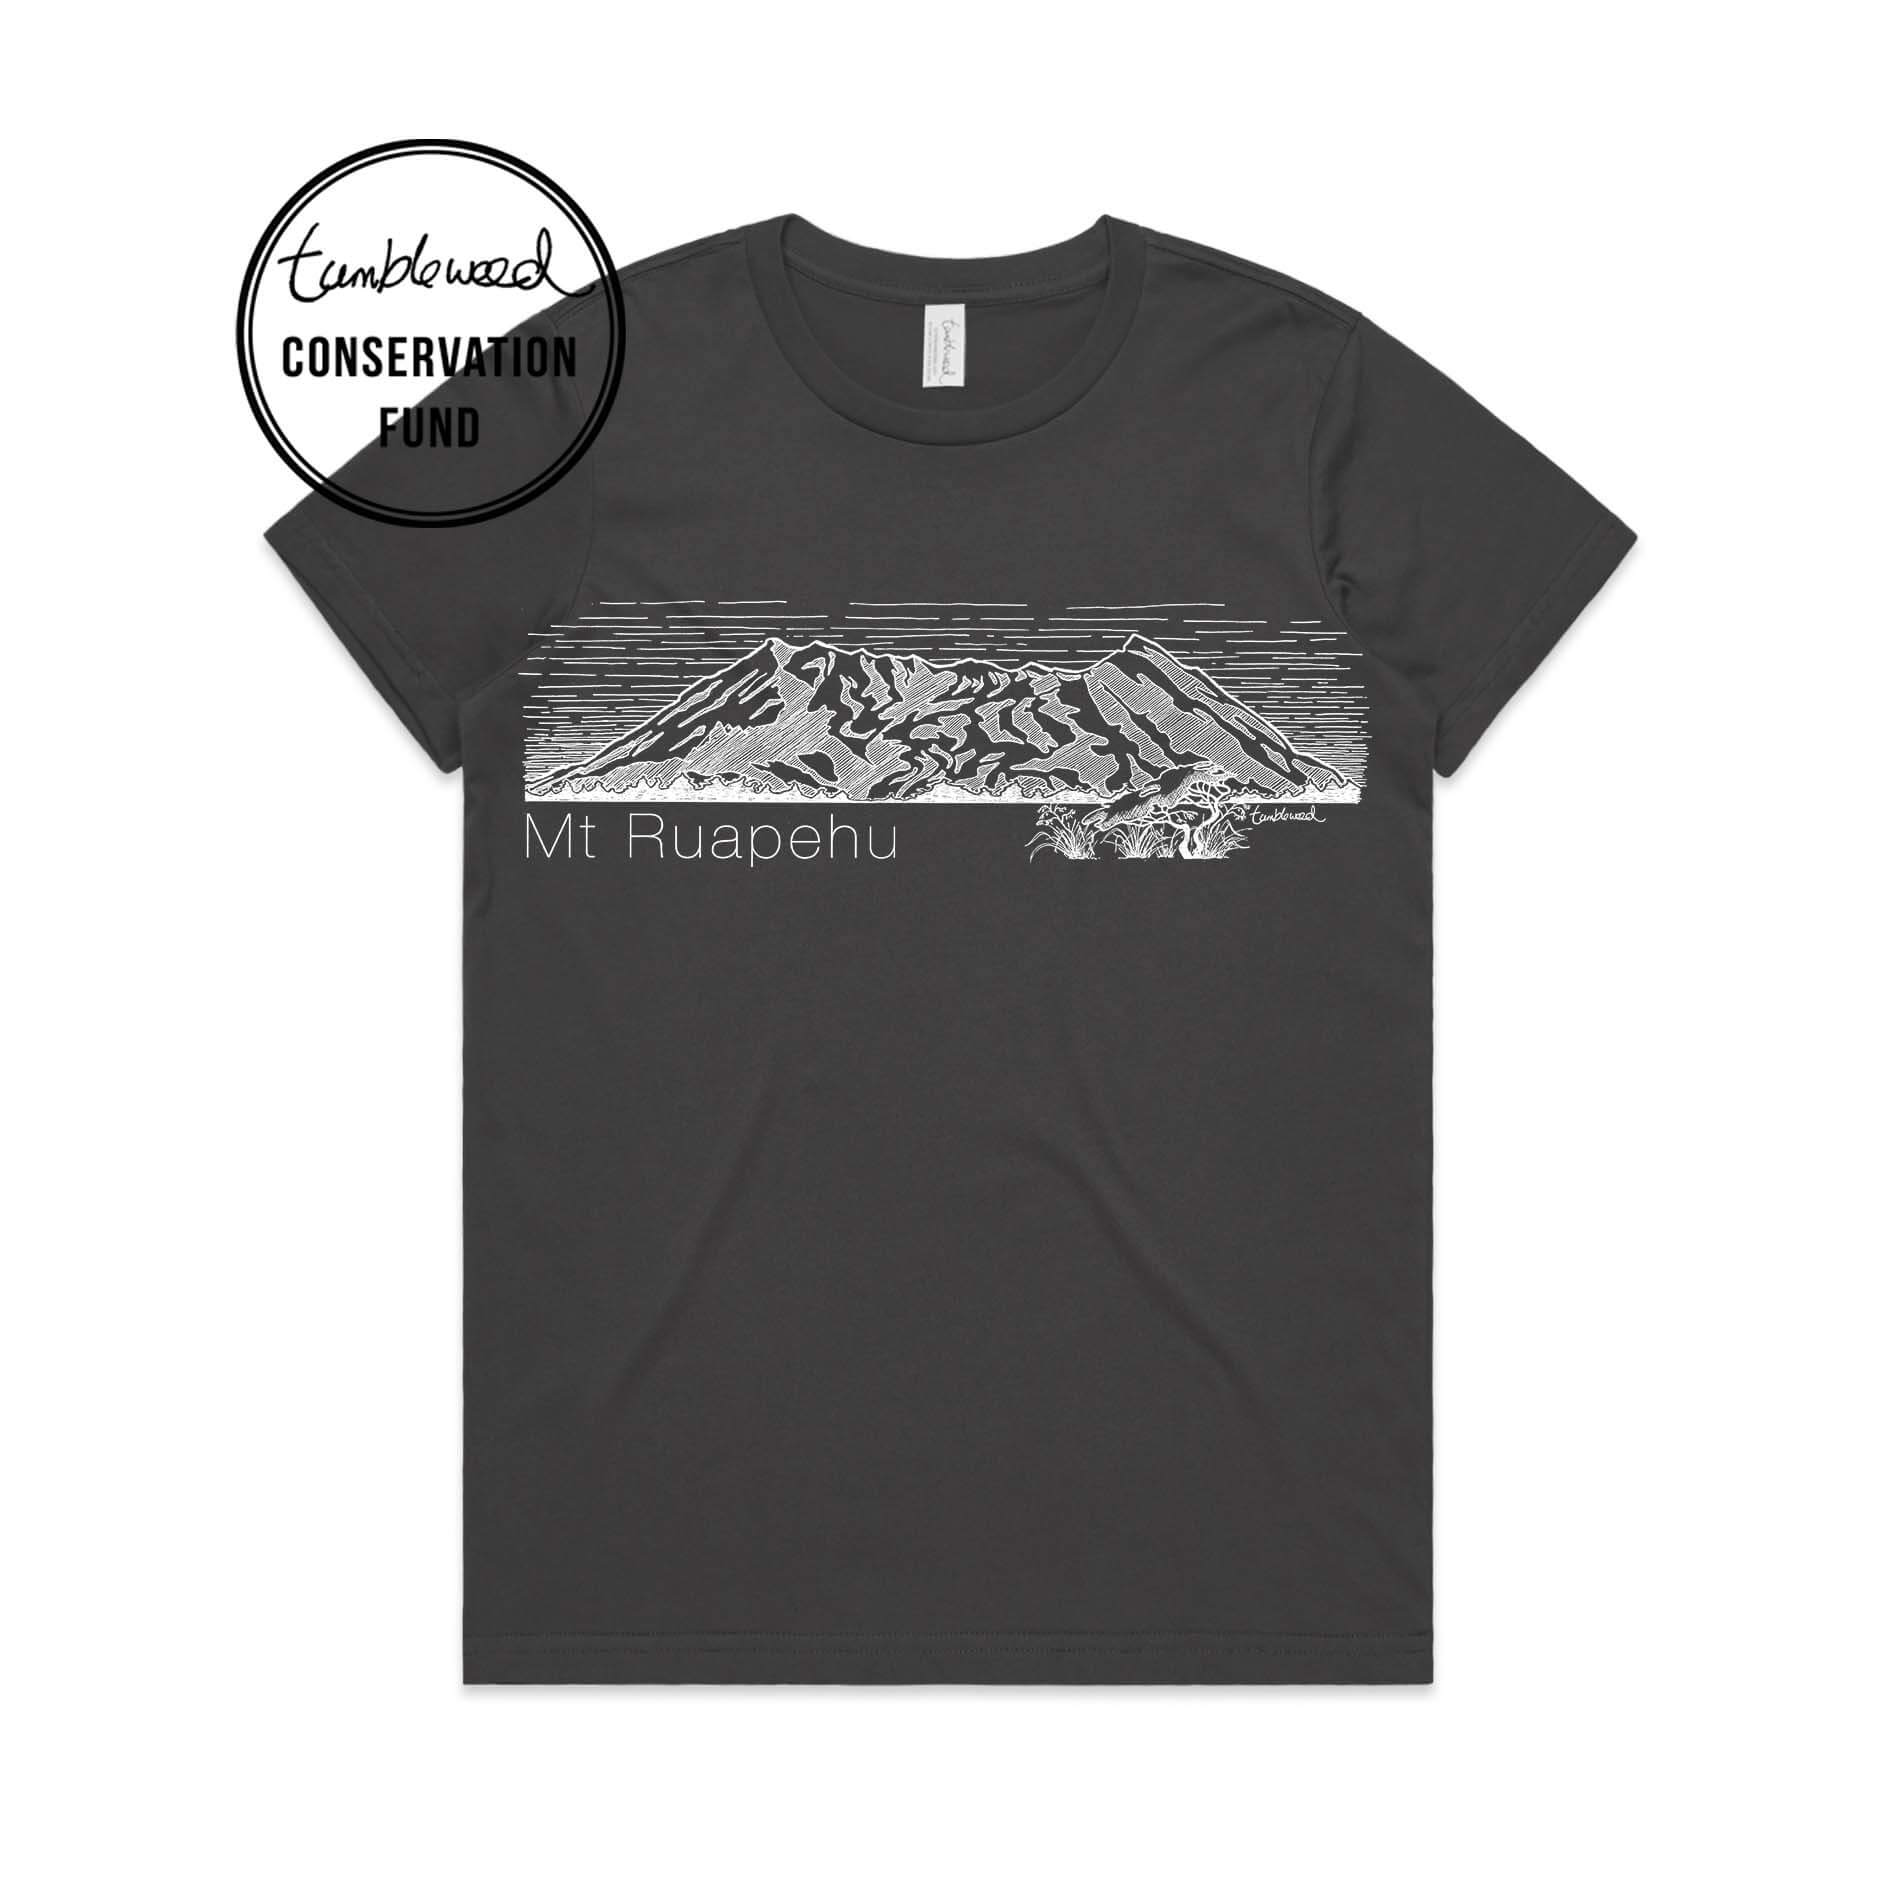 Charcoal, male t-shirt featuring a screen printed Mt Ruapehu design.